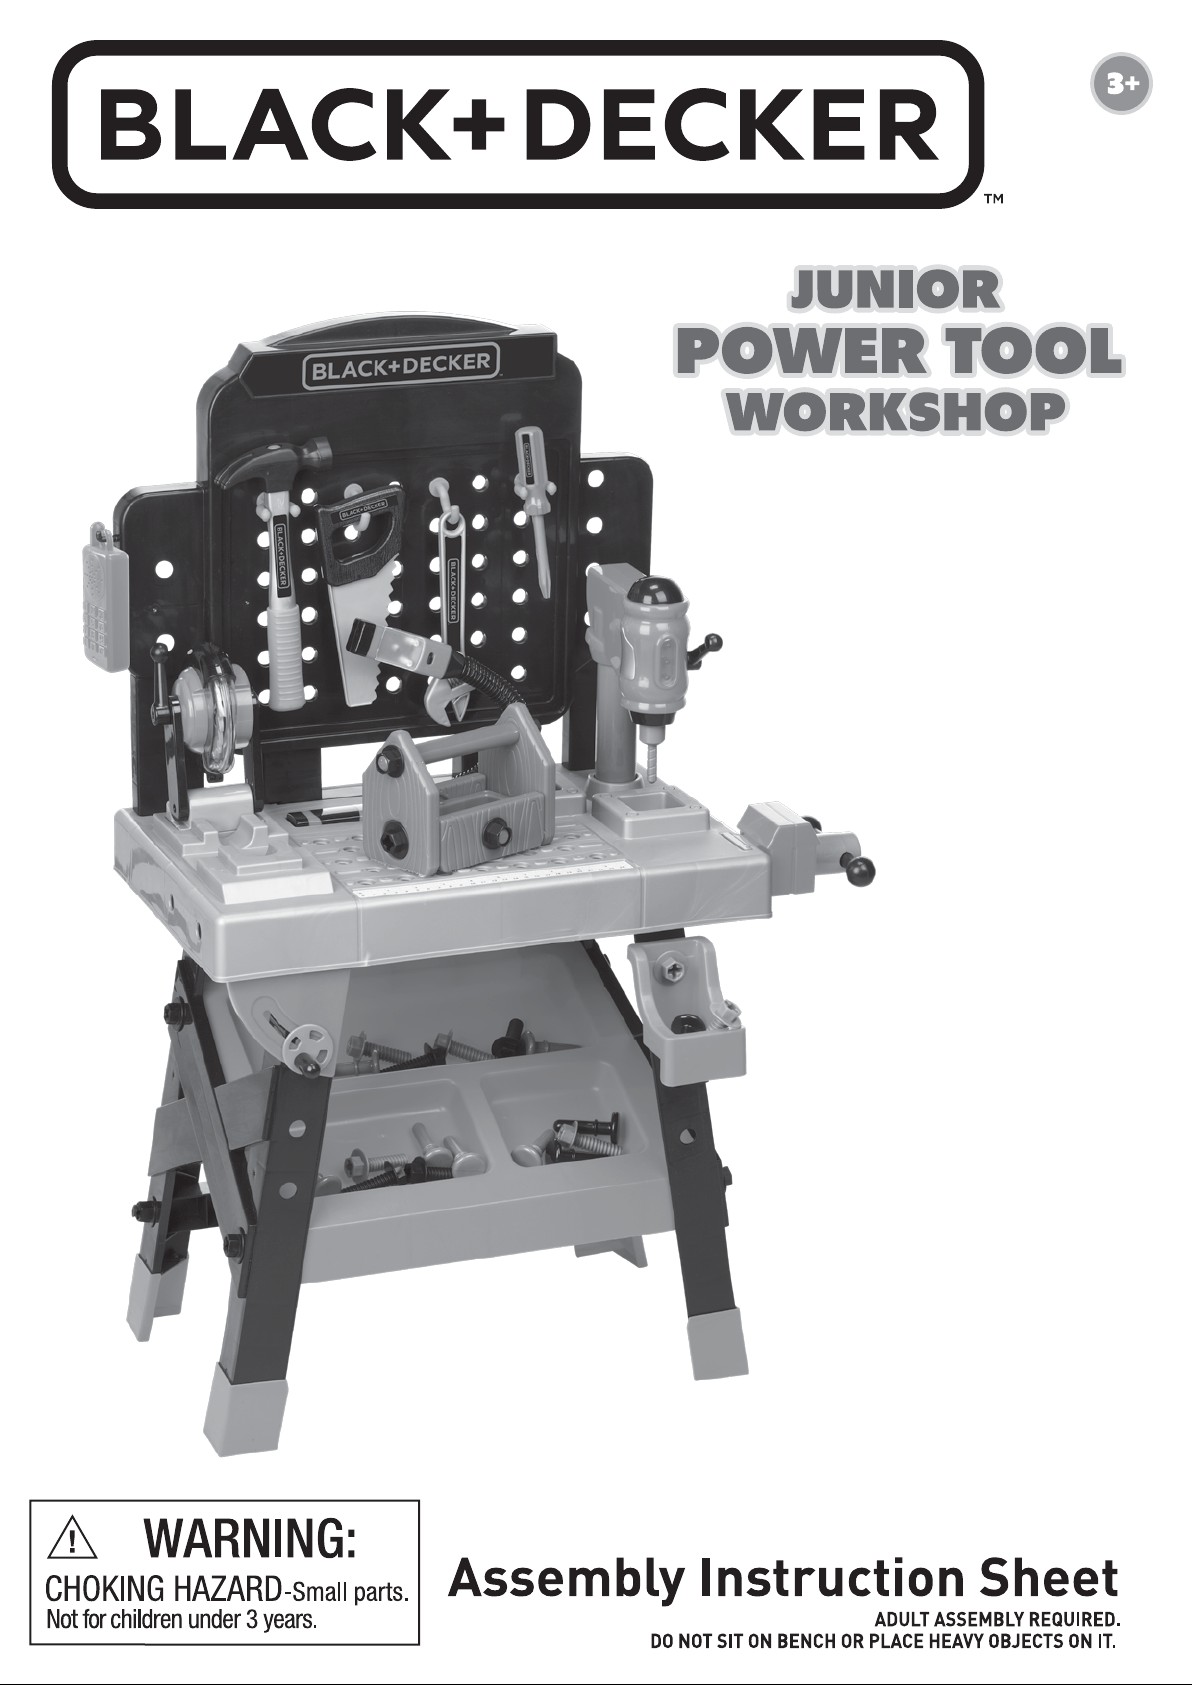 Black+Decker Kids Workbench - Power Tools Workshop - Build Your